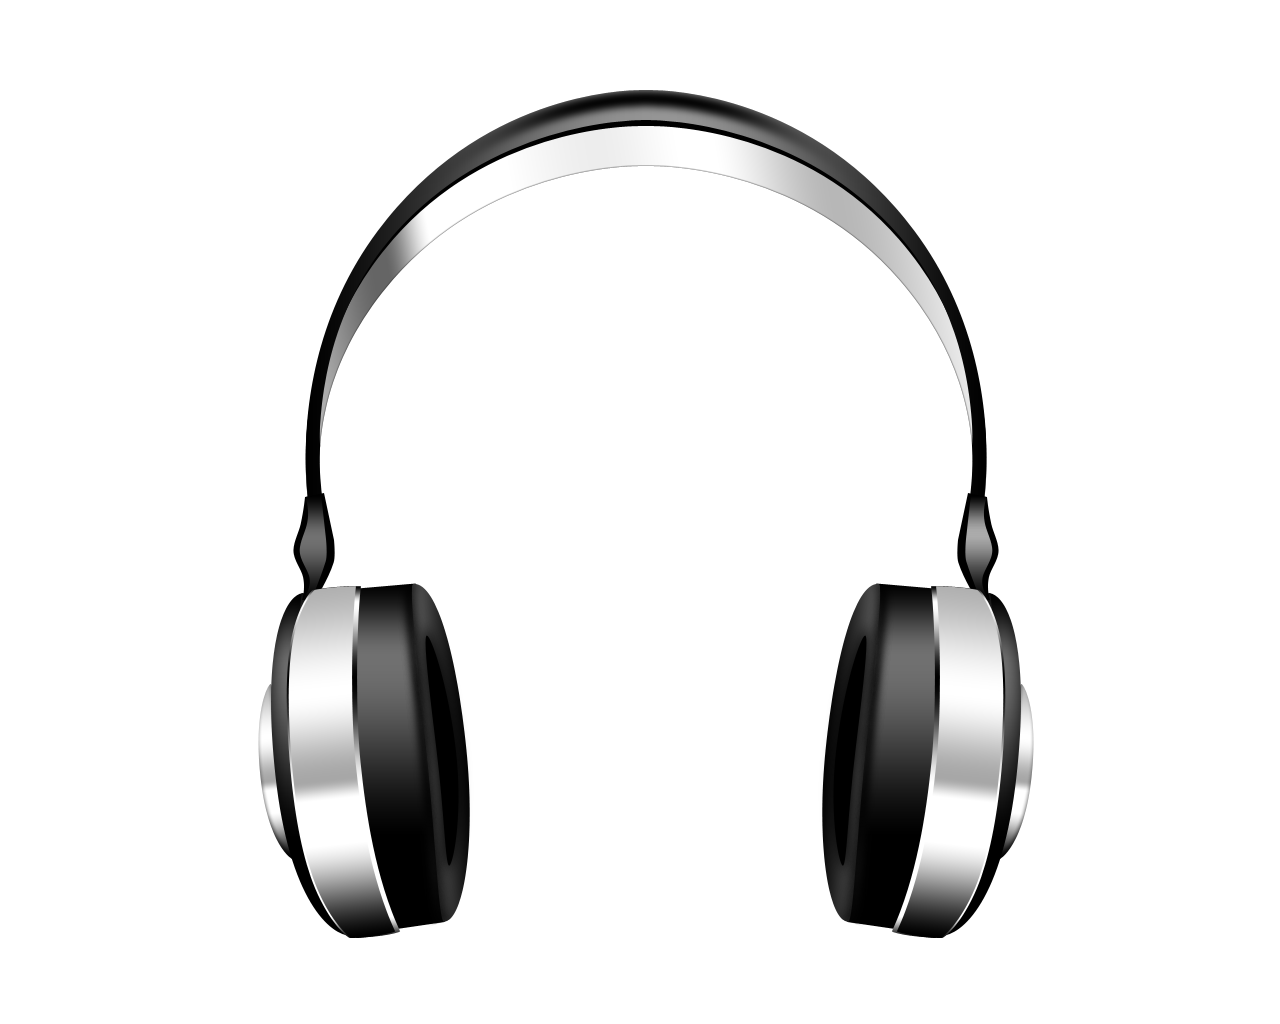 Headphones PNG image transparent image download, size: 1280x1024px